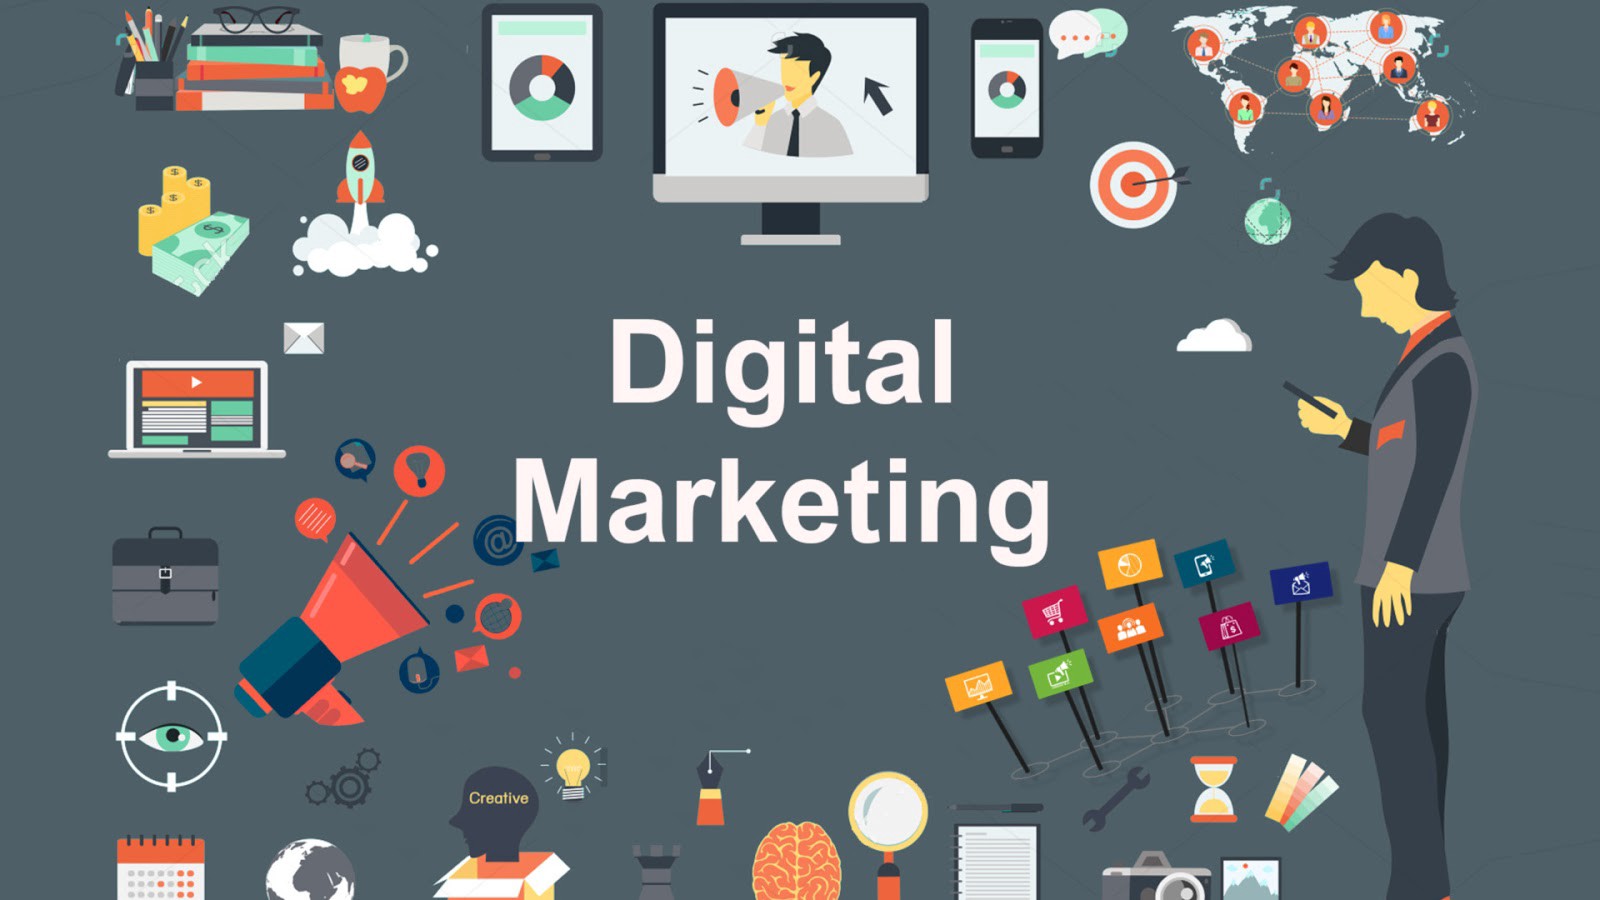 Digital marketing 2020